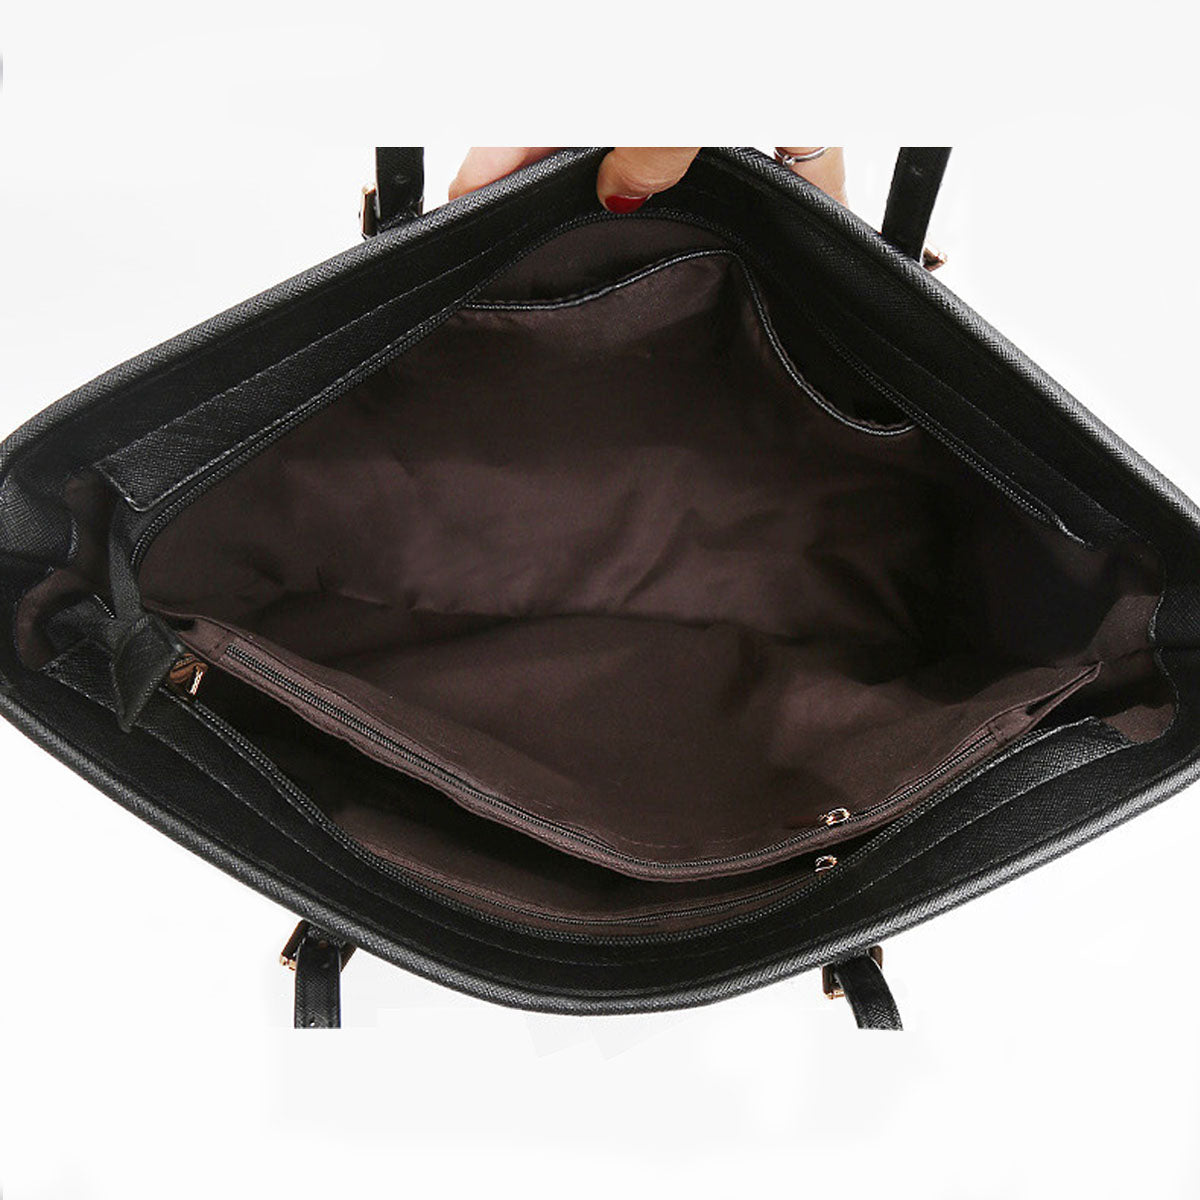 German Shorthaired Pointer Tote Bag V2